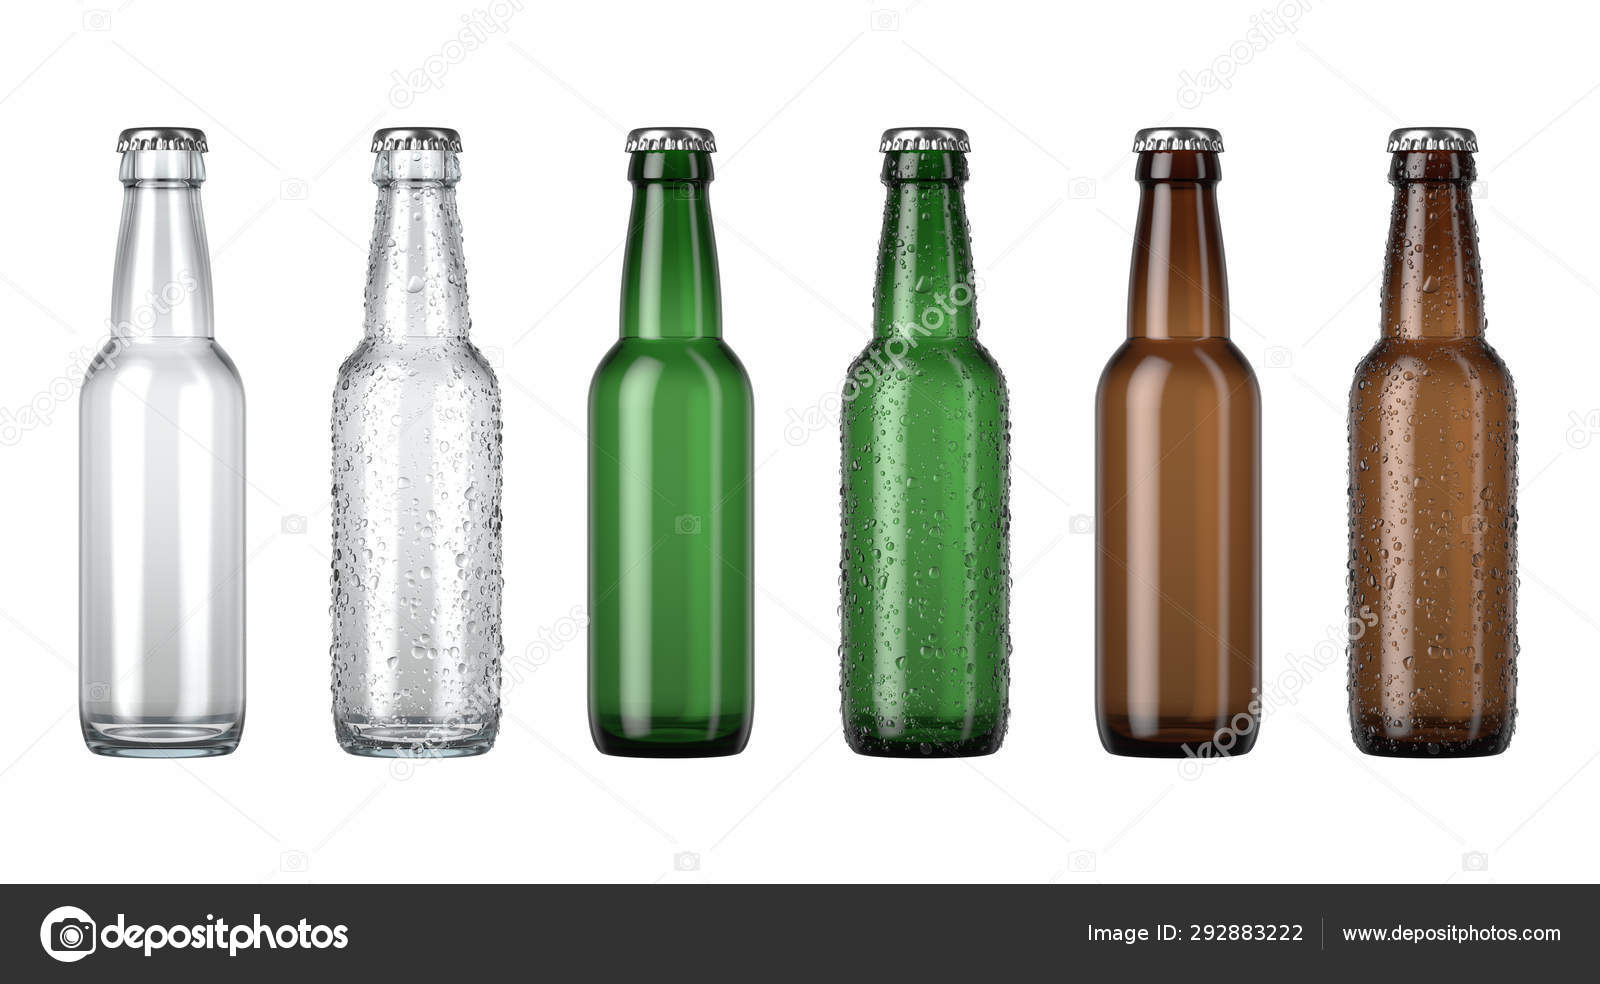 https://st4.depositphotos.com/1454700/29288/i/1600/depositphotos_292883222-stock-photo-empty-beer-bottle-color-range.jpg